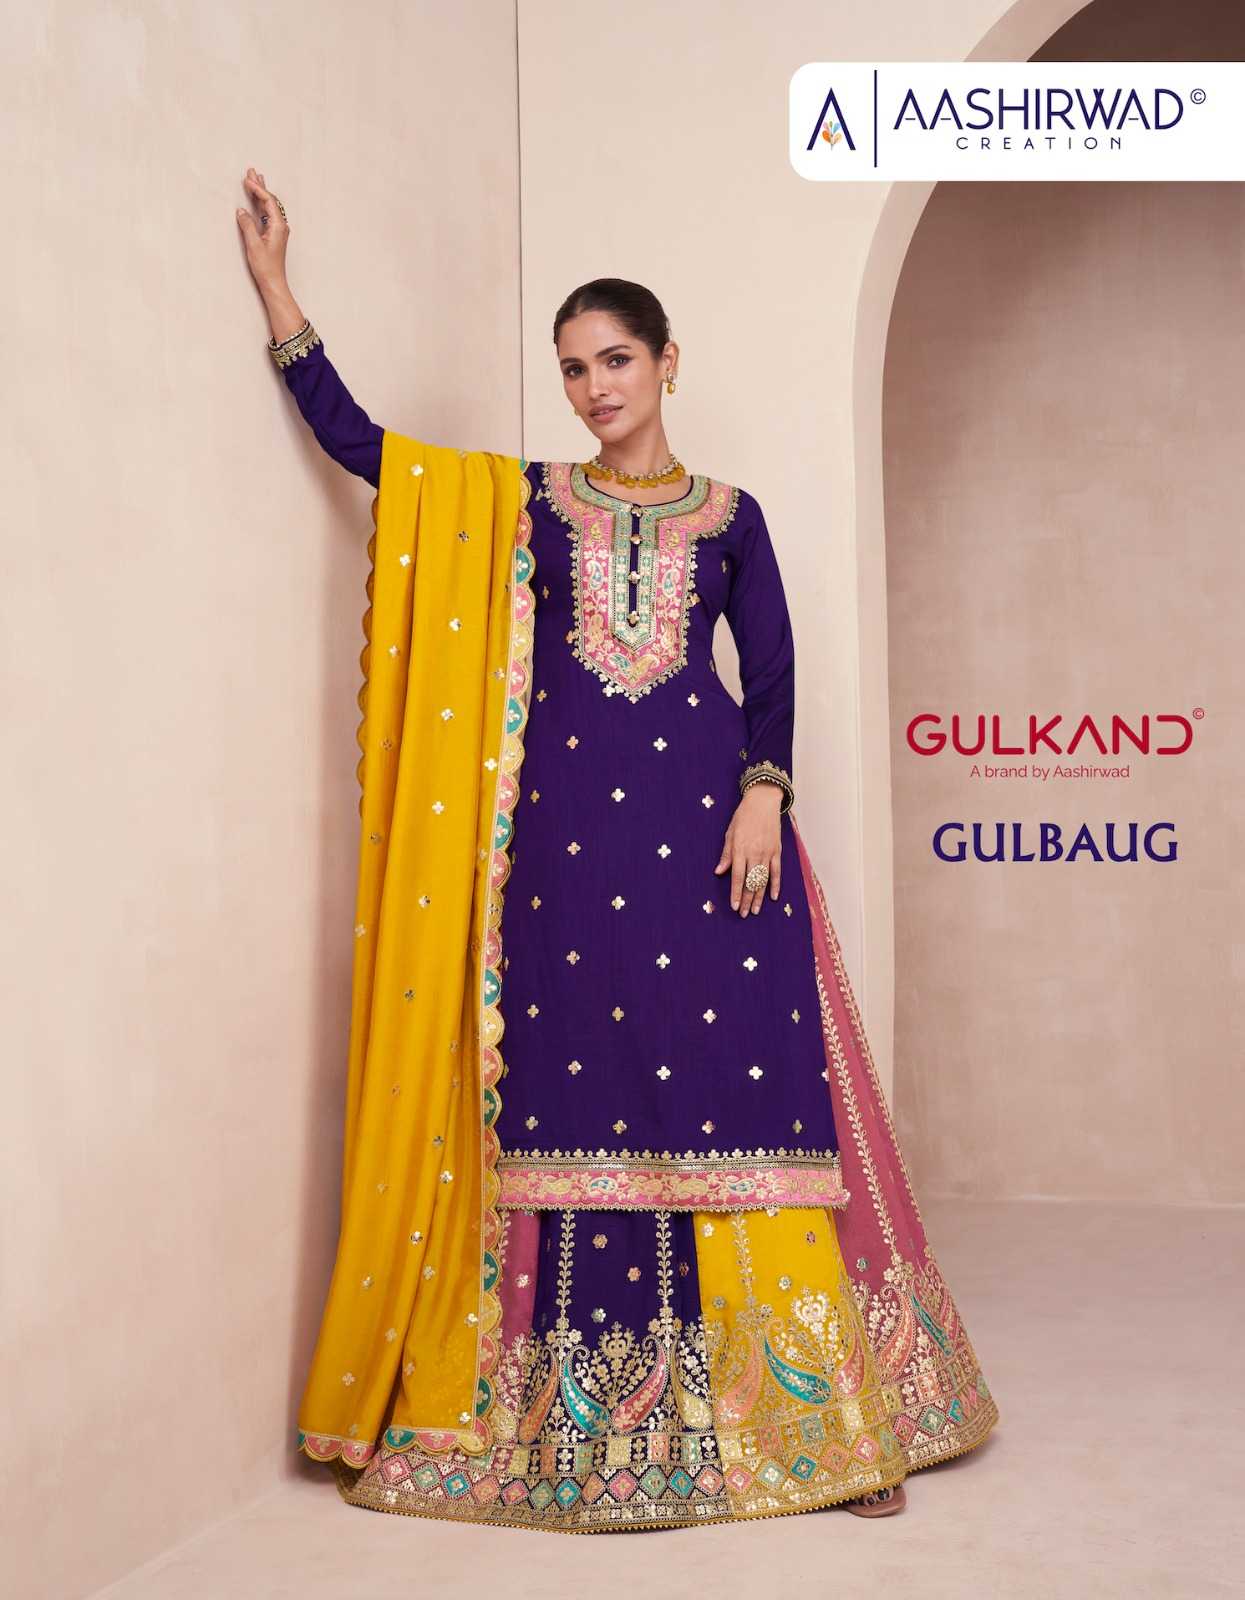 aashirwad creation gulkand gulbaug readymade designer kurti skirt with dupatta 